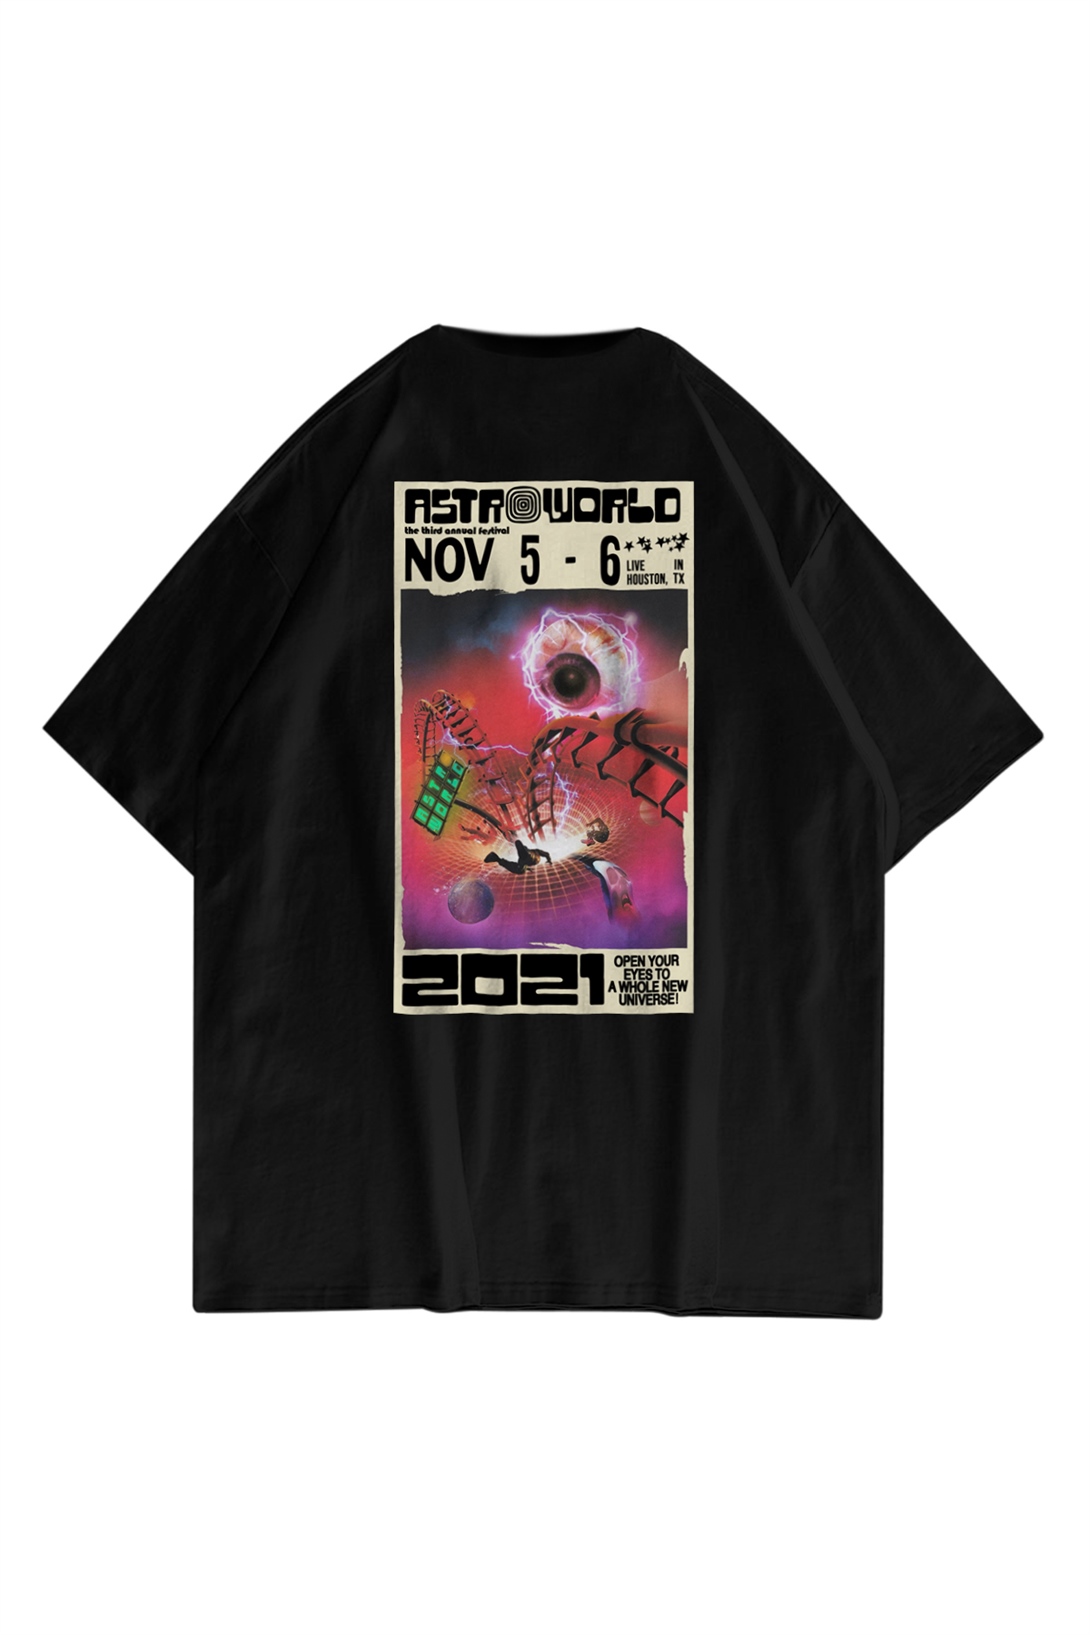 Trendiz Unisex Astroworld 2021 Siyah Tshirt